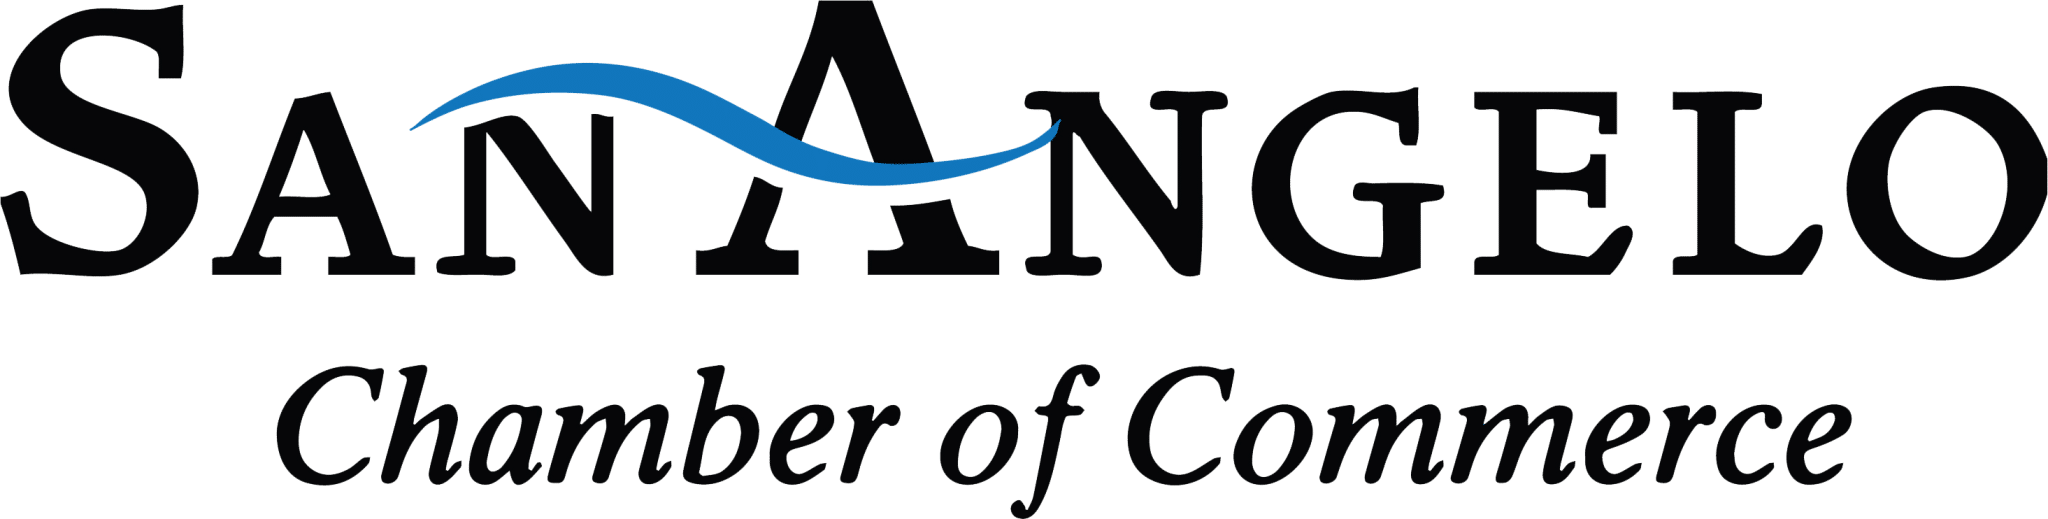 San Angelo Chamber of Commerce